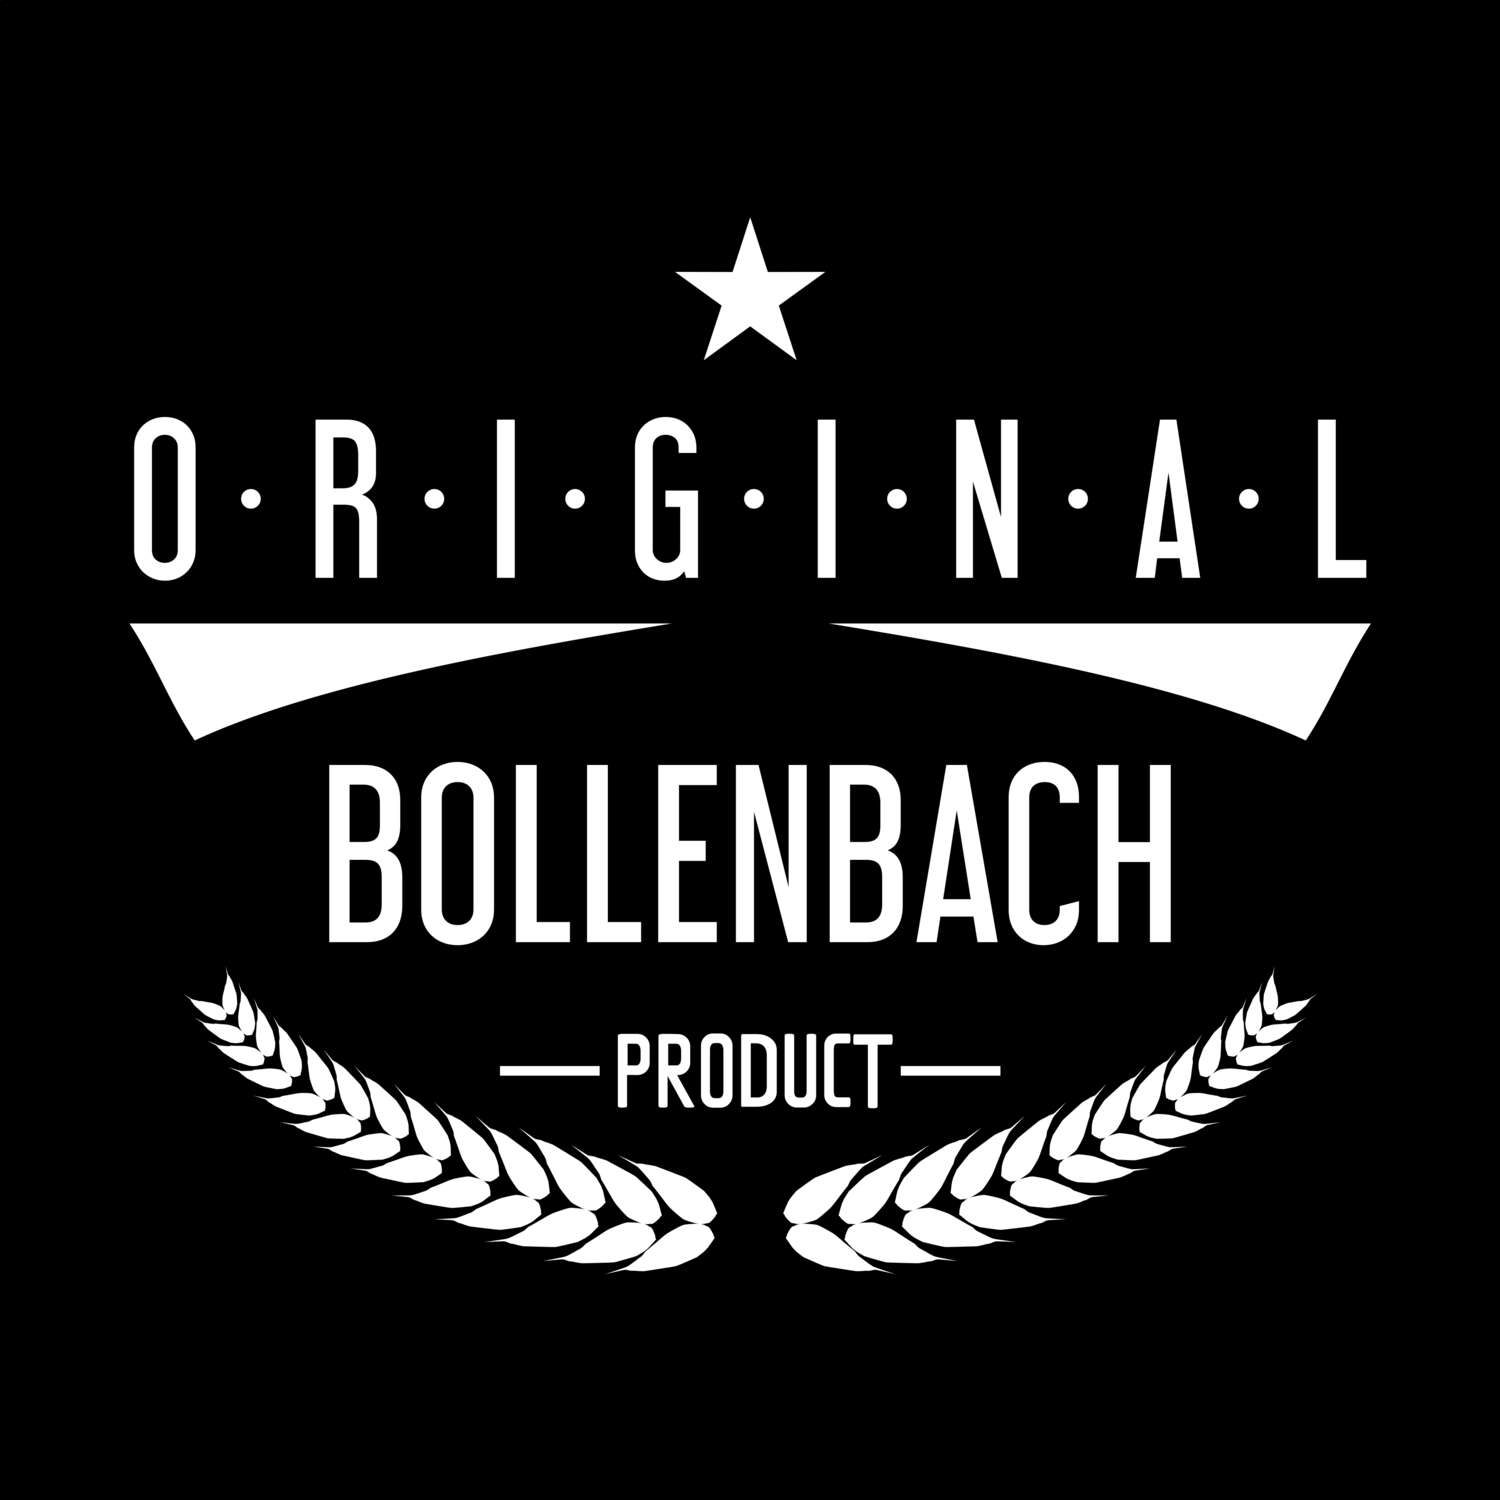 Bollenbach T-Shirt »Original Product«